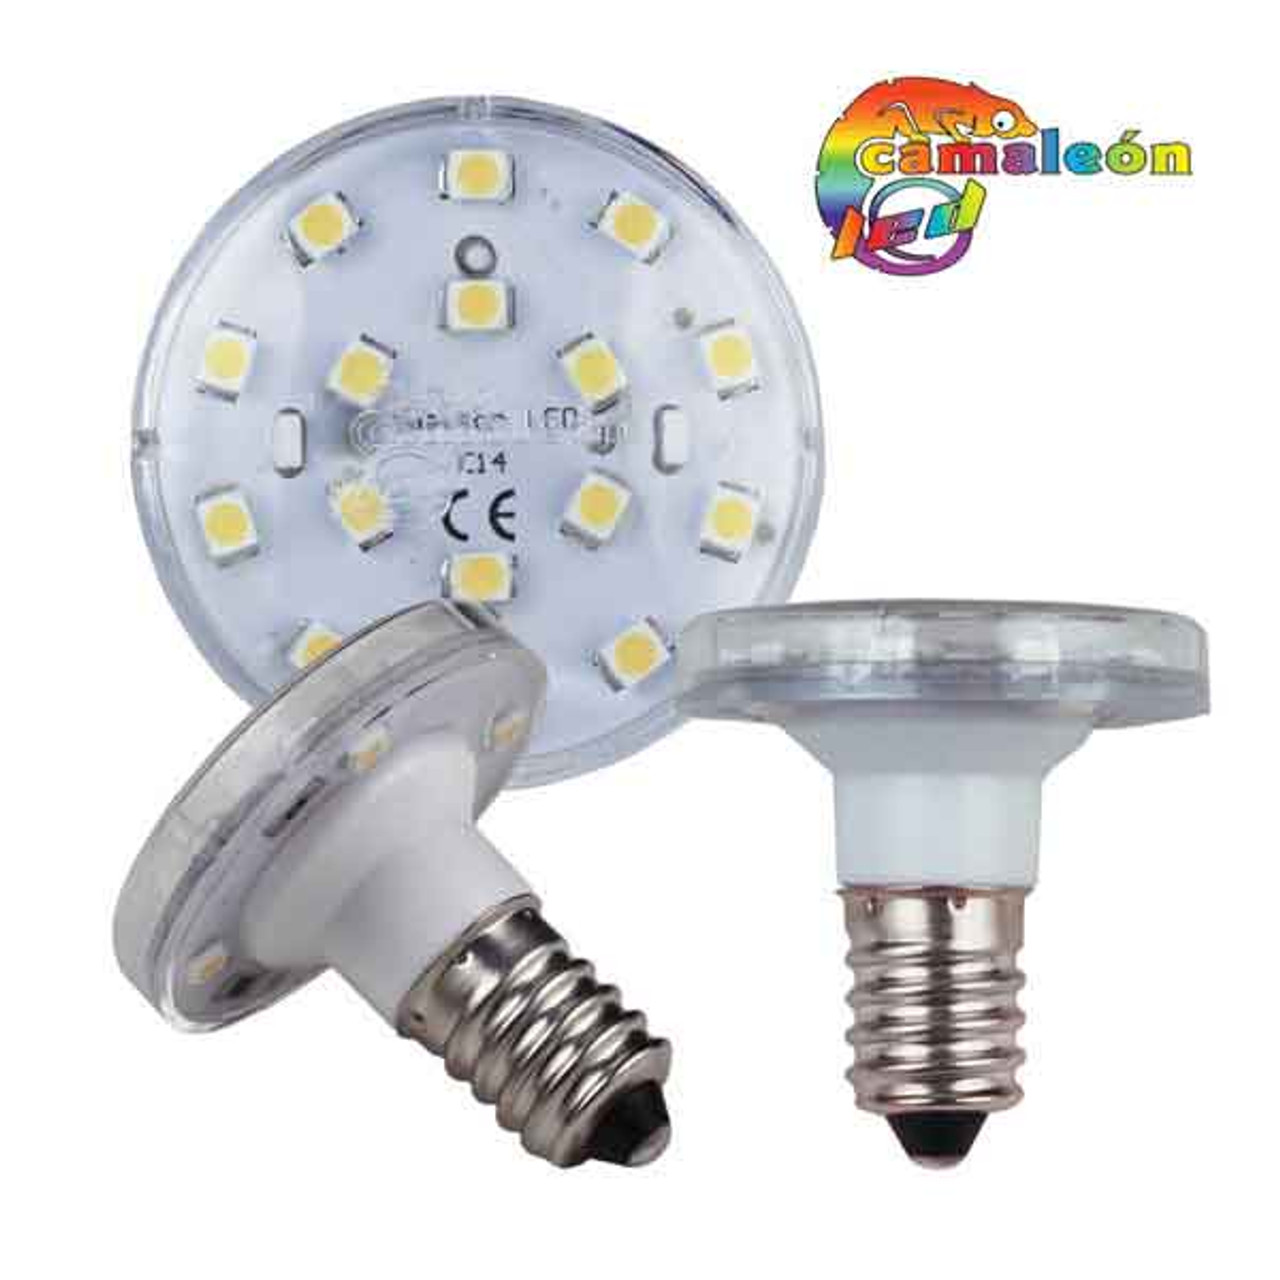 Camaleon E14 24 Volt LED Warm White Turbo Replacement Bulbs  (227LEDCE14/24WW)